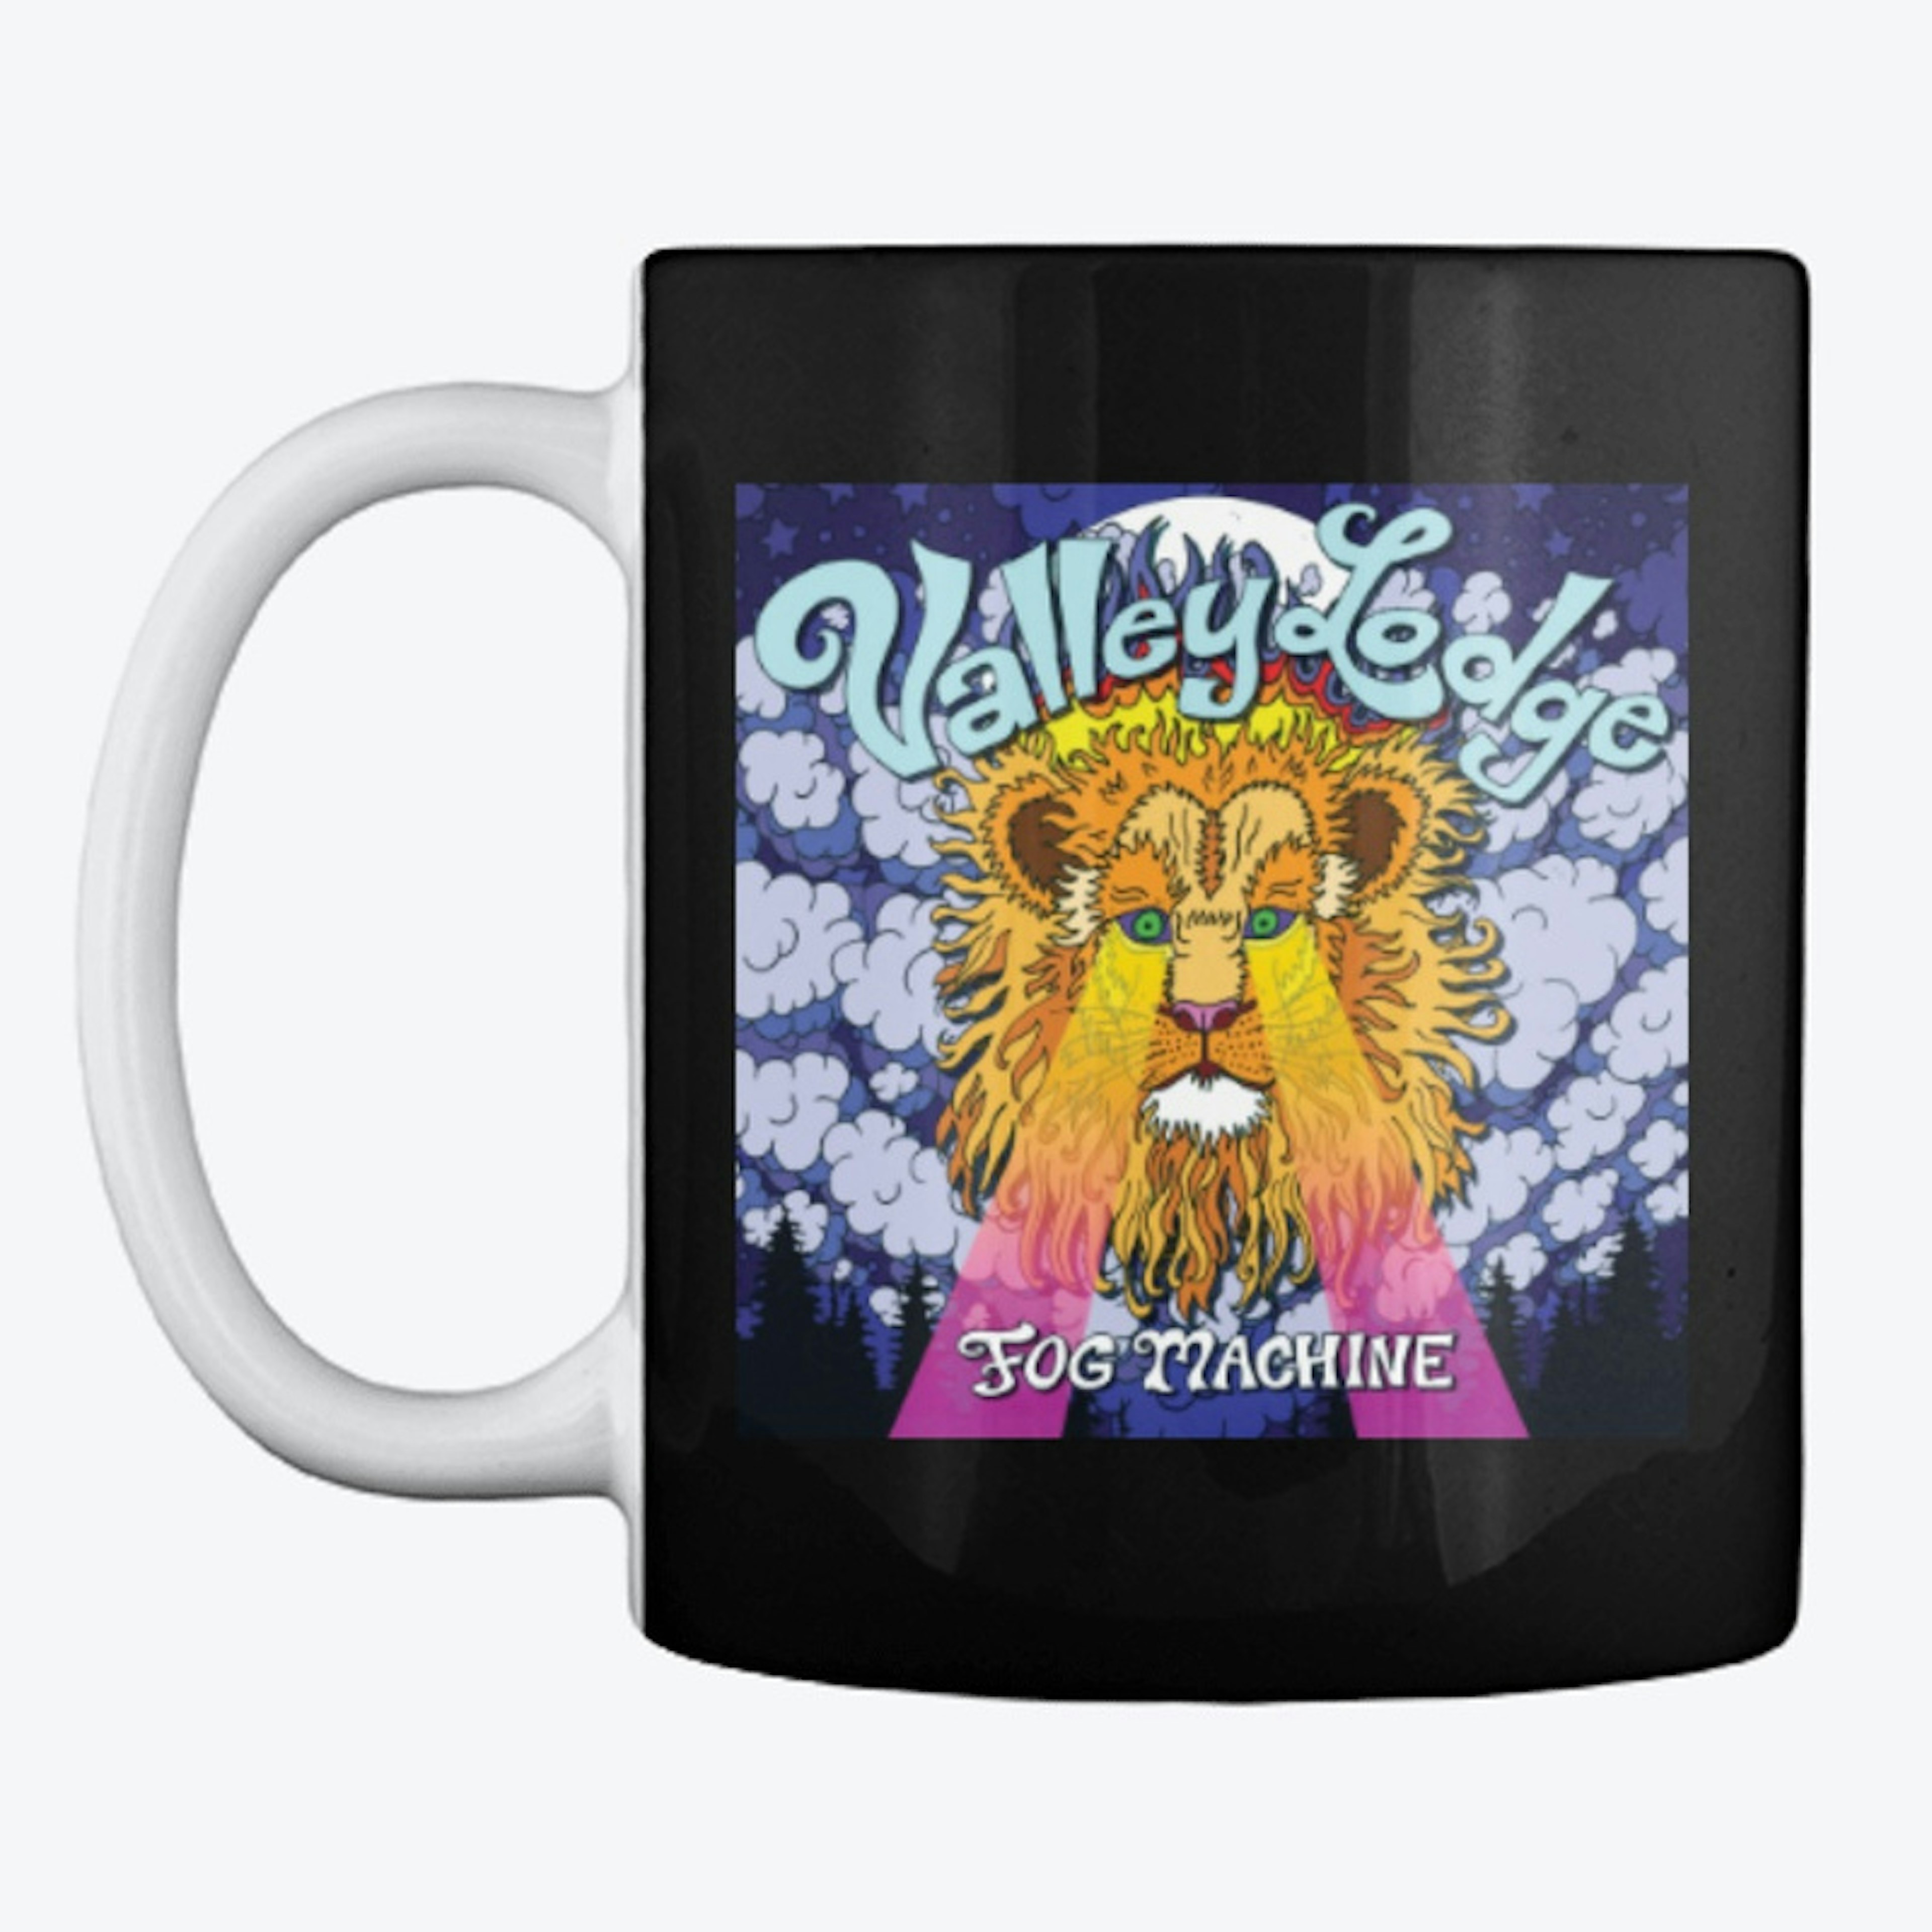 Valley Lodge coffee/scotch mug